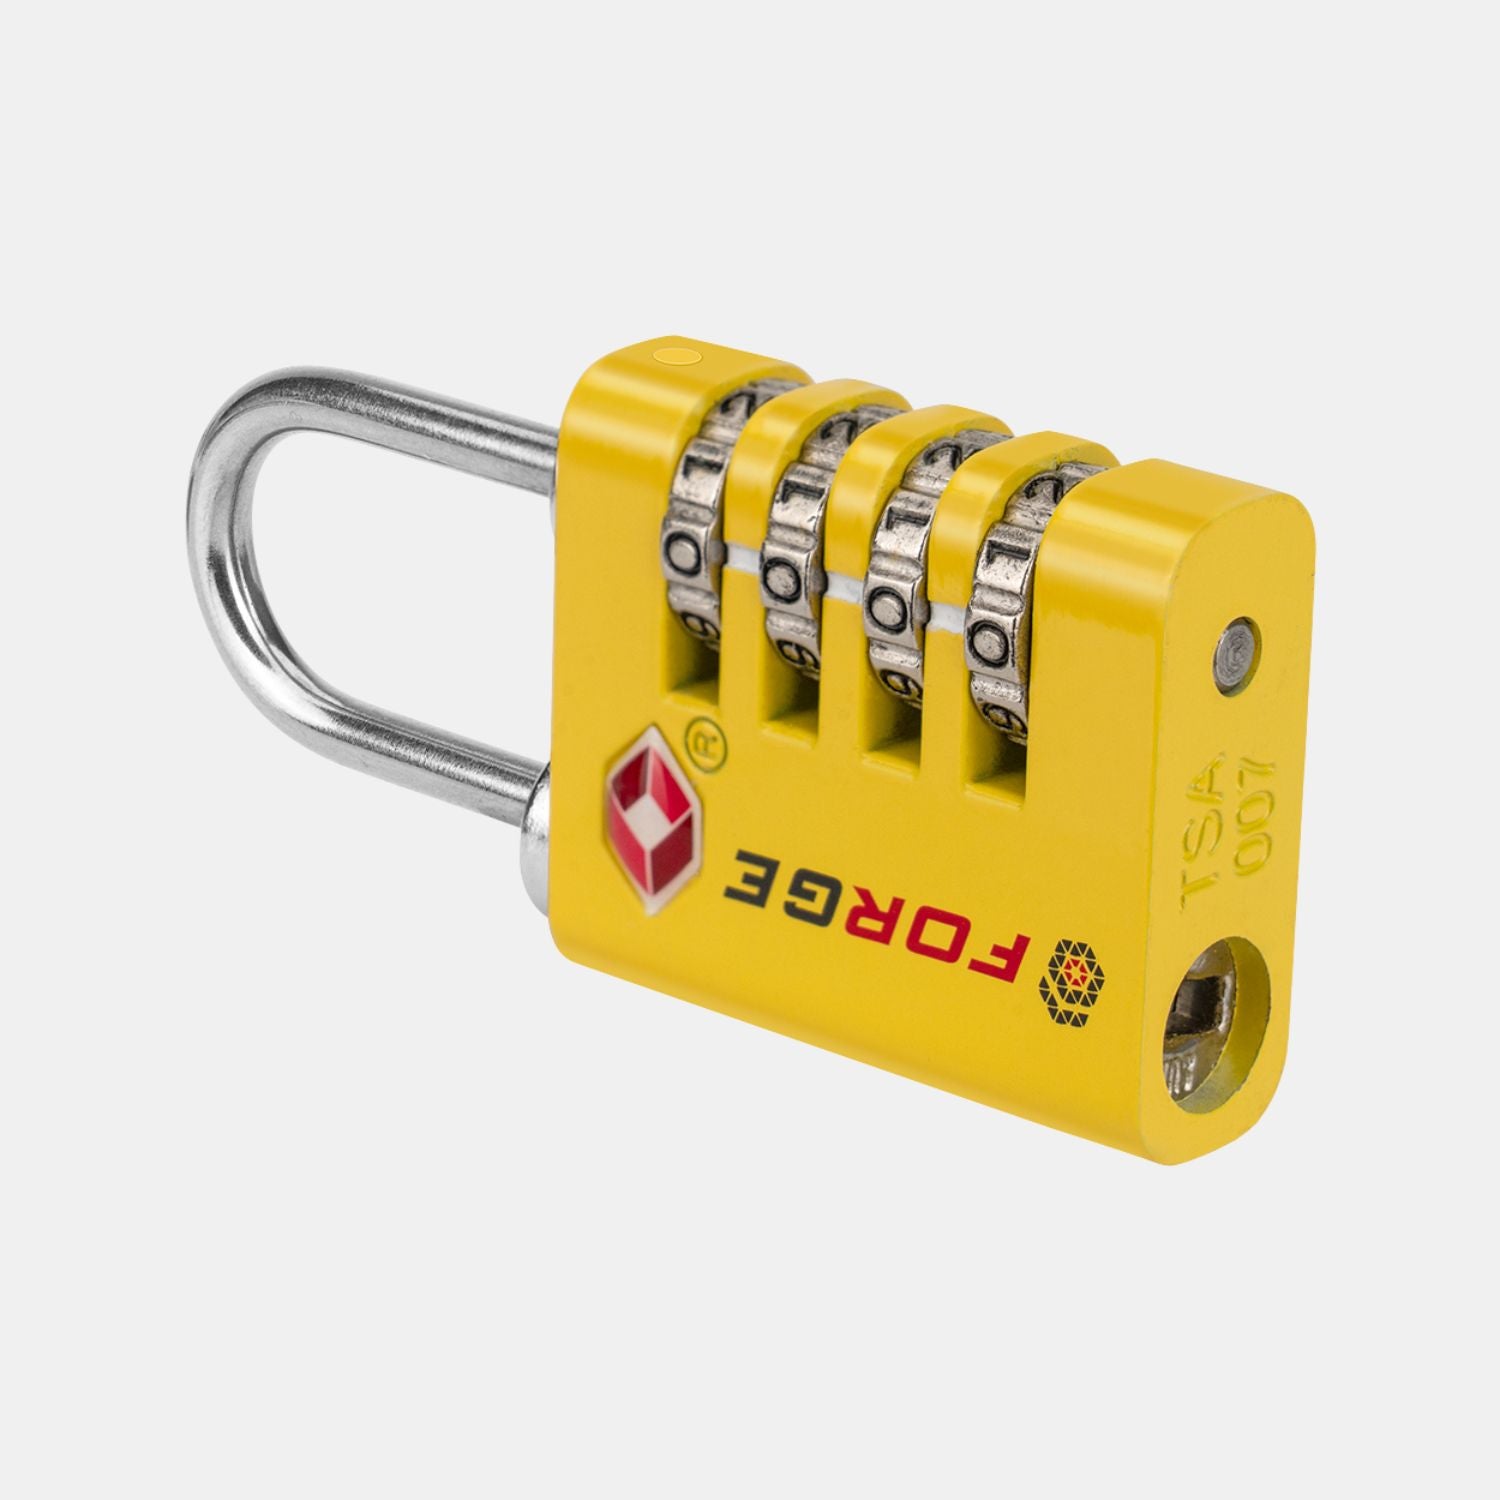 Dual-Opening TSA Approved Luggage Lock: Key or Combination Access, Heavy Duty. 4 Yellow Locks